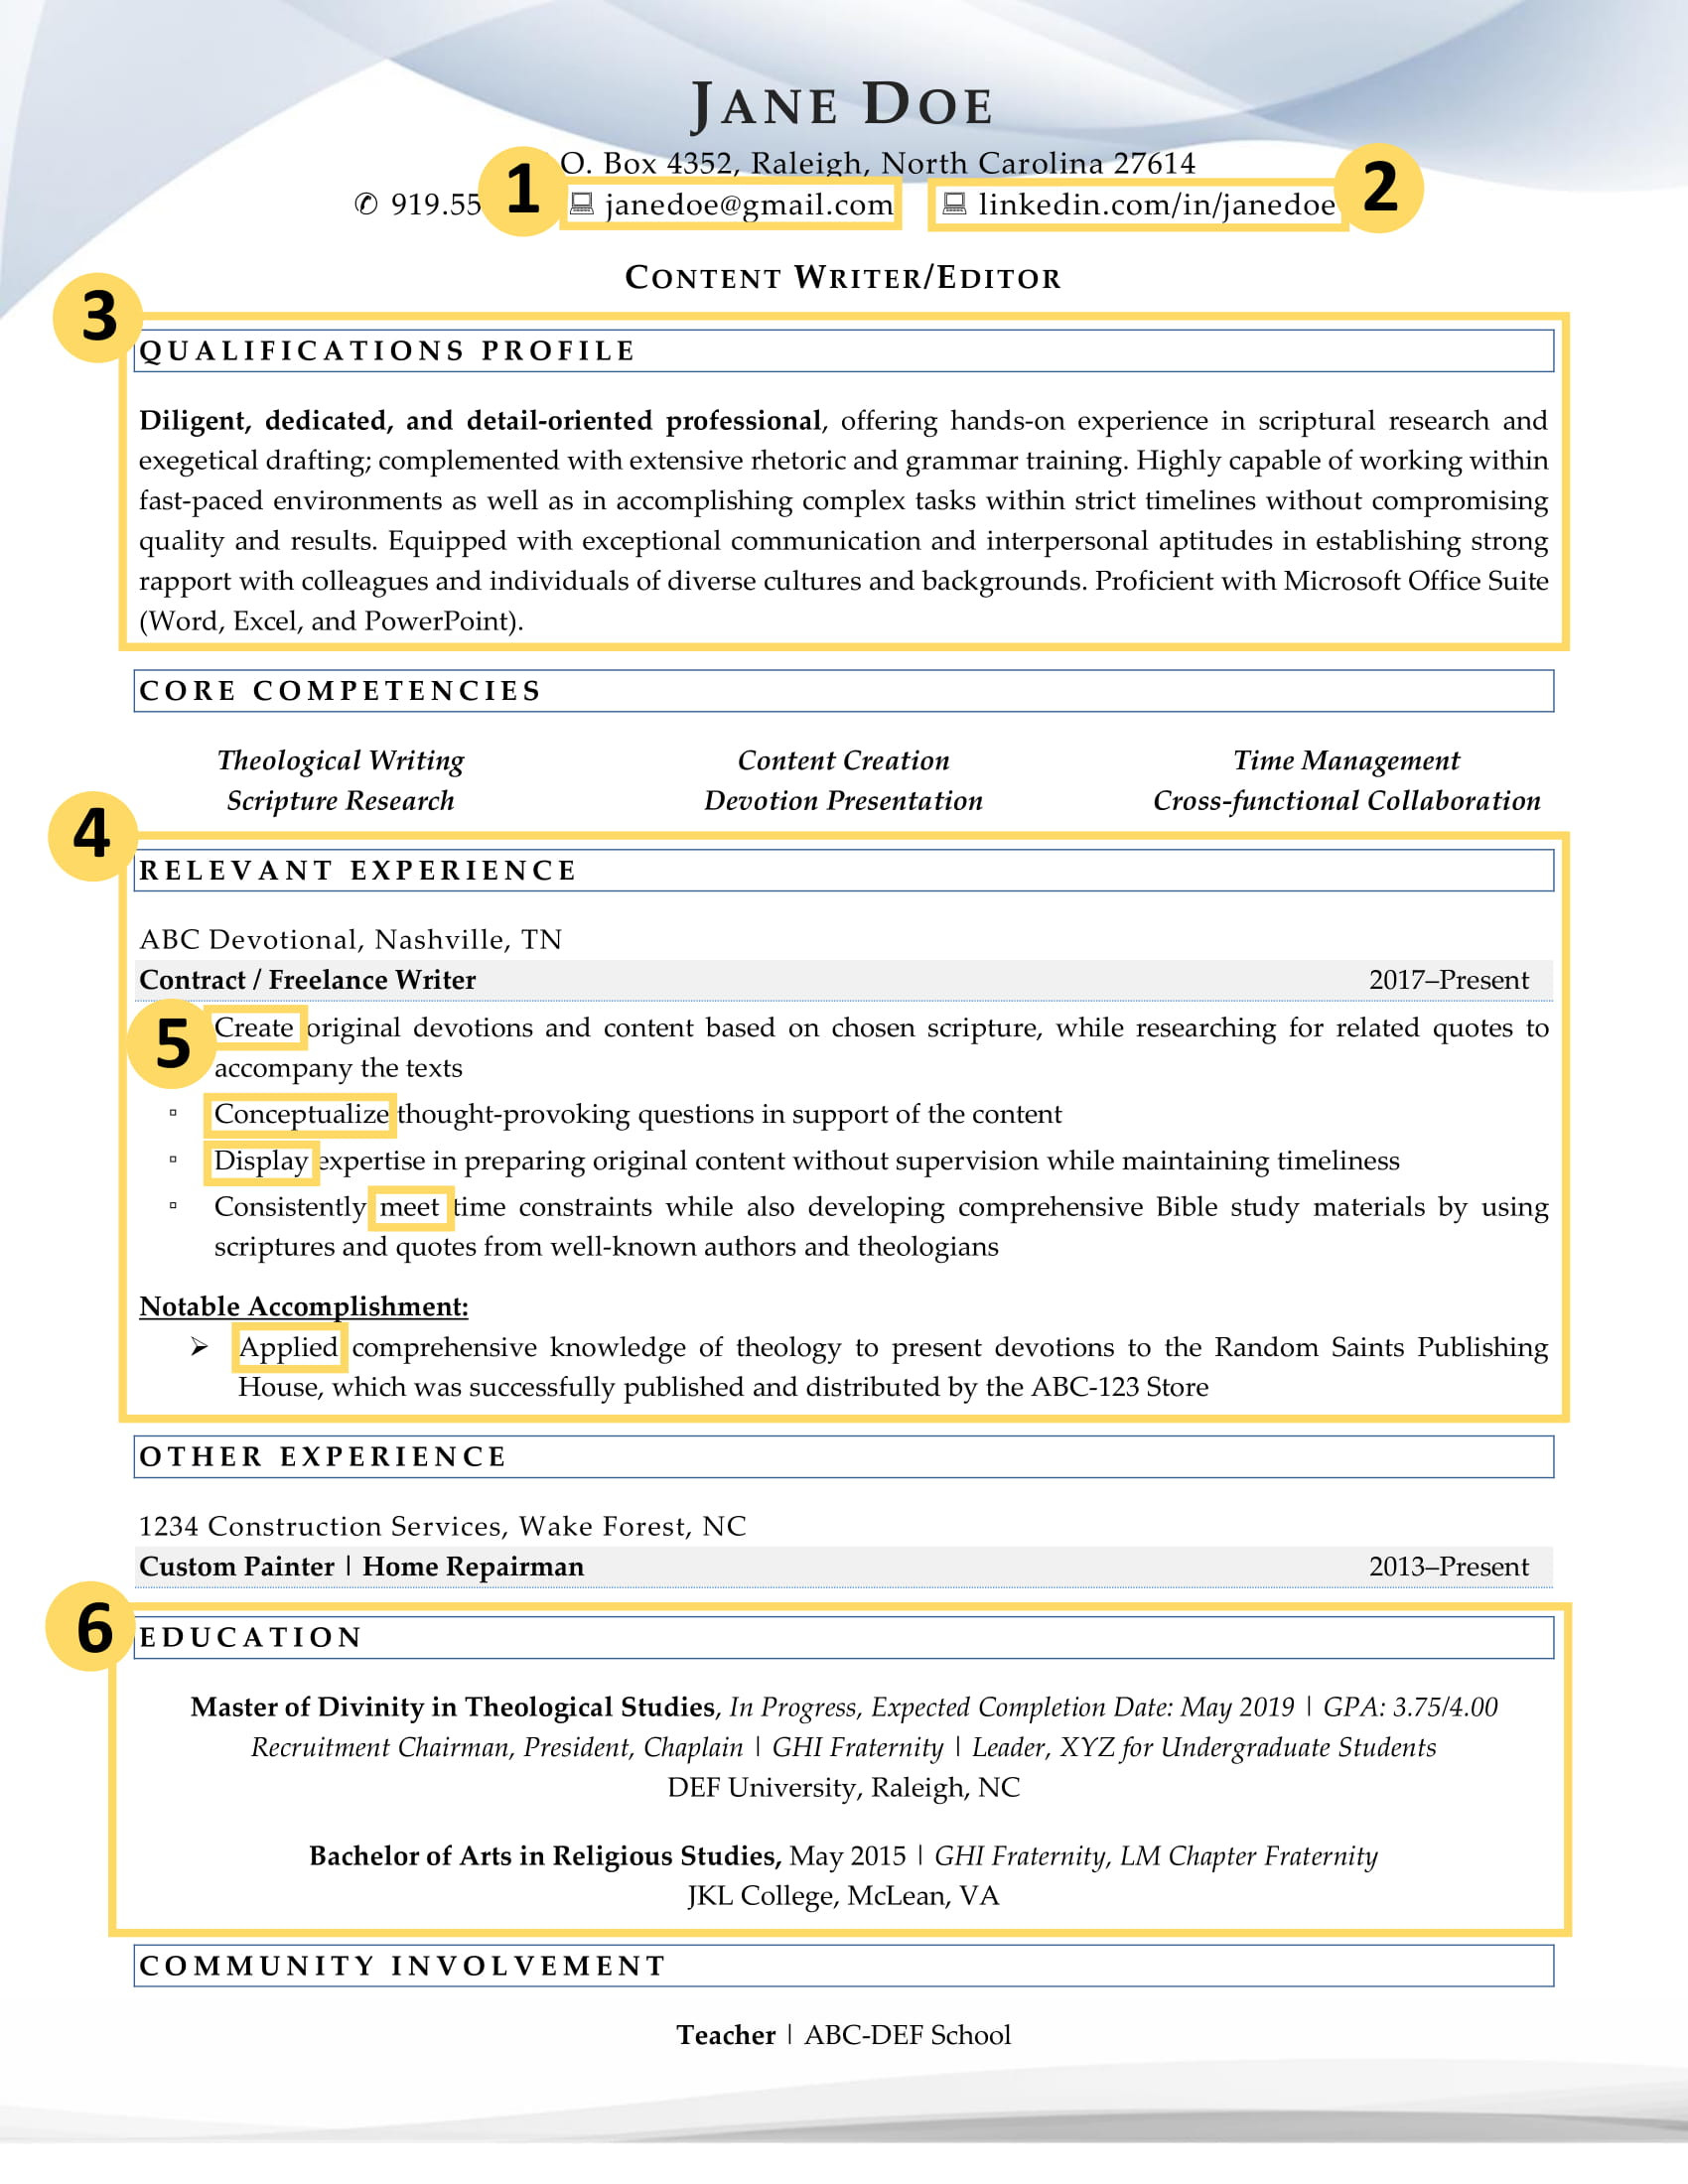 Sample Resume for Fresh College Graduate Recent College Graduate Resume: 10 Factors that Make It Excellent